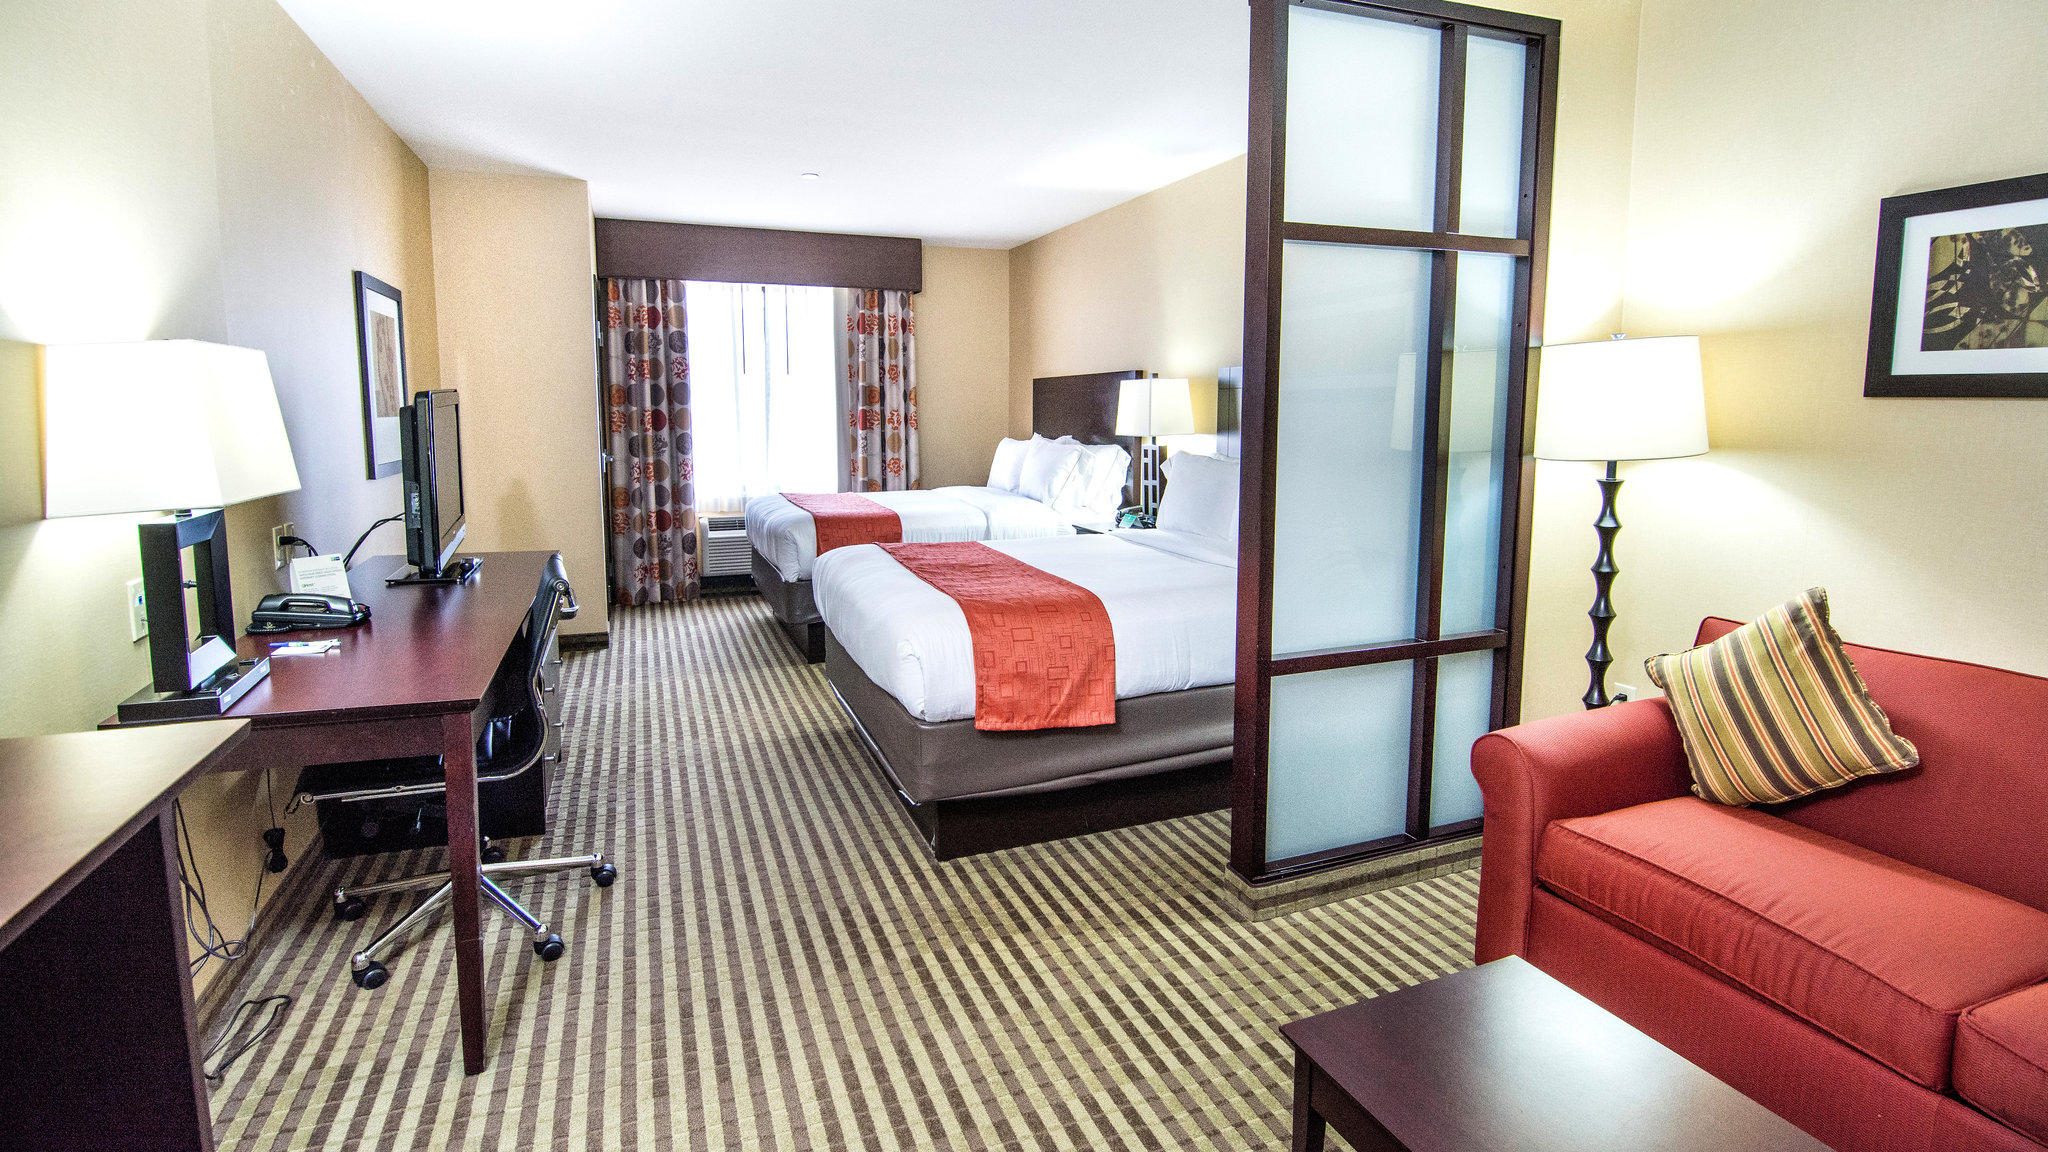 Holiday Inn Express & Suites Elkton - University Area Photo